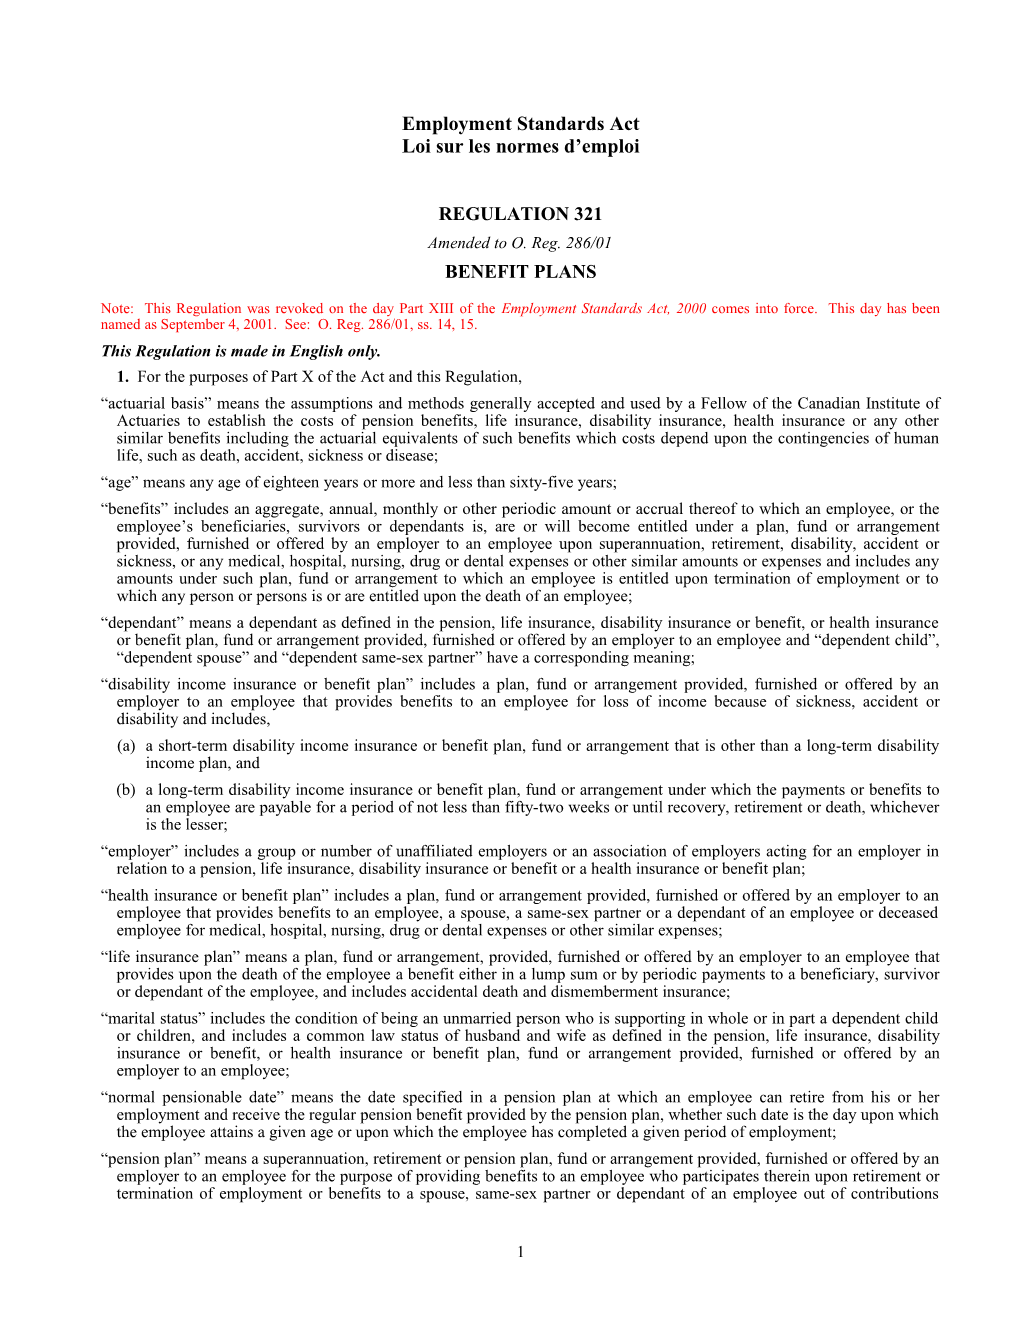 Employment Standards Act - R.R.O. 1990, Reg. 321